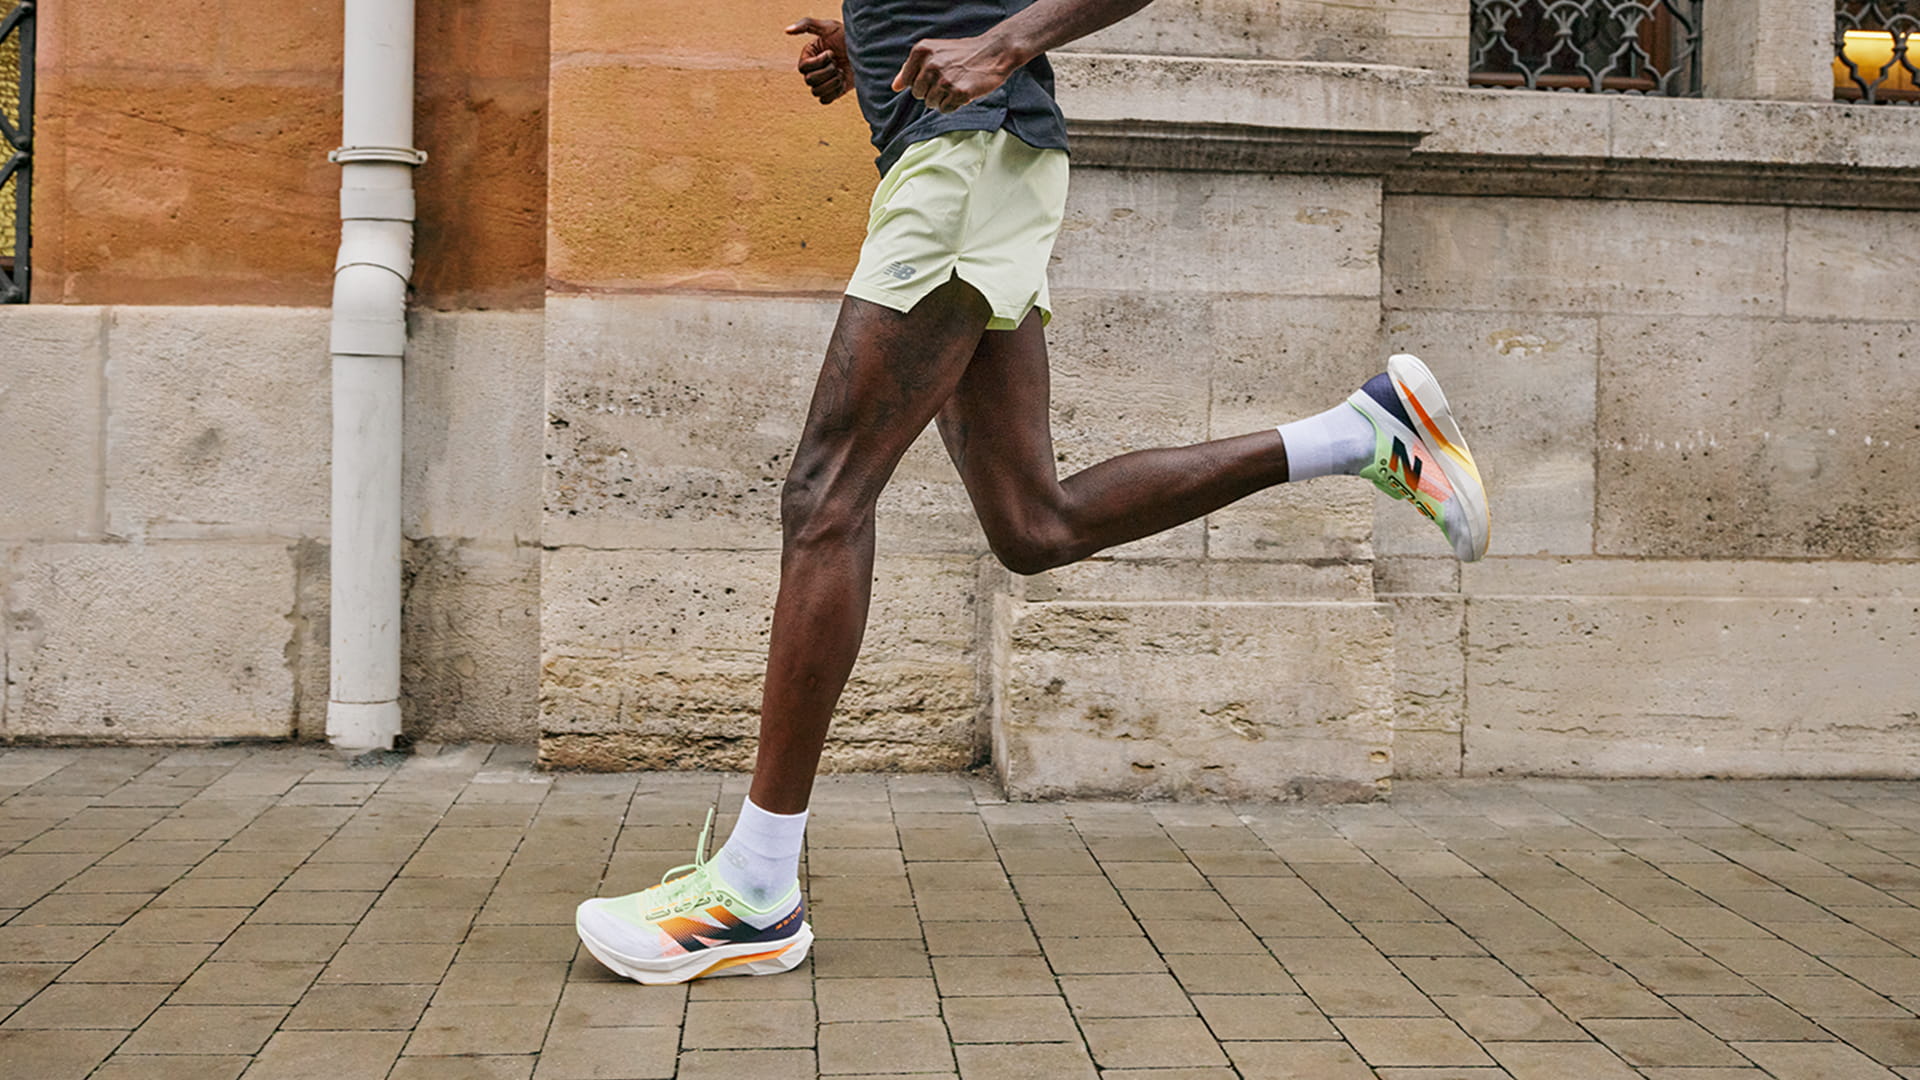 runner wearing the New Balance TCS London Marathon kit